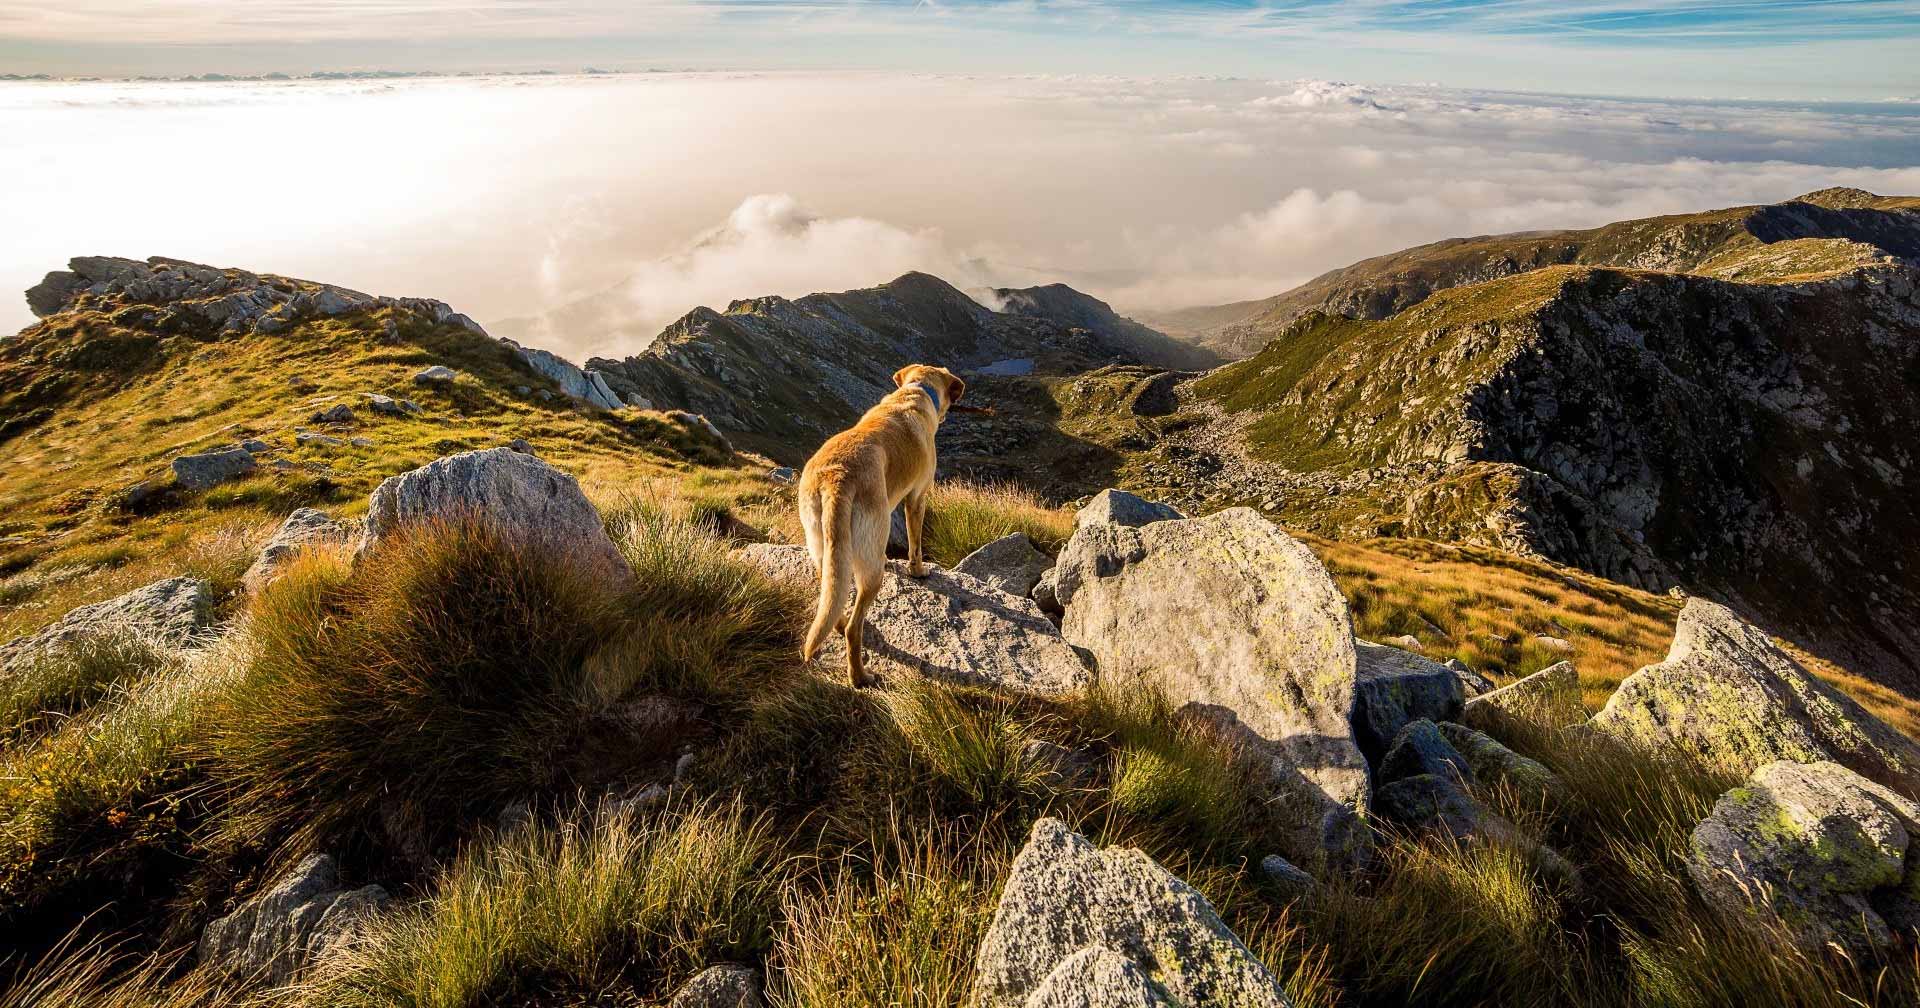 yellow labrador overlooking mountains